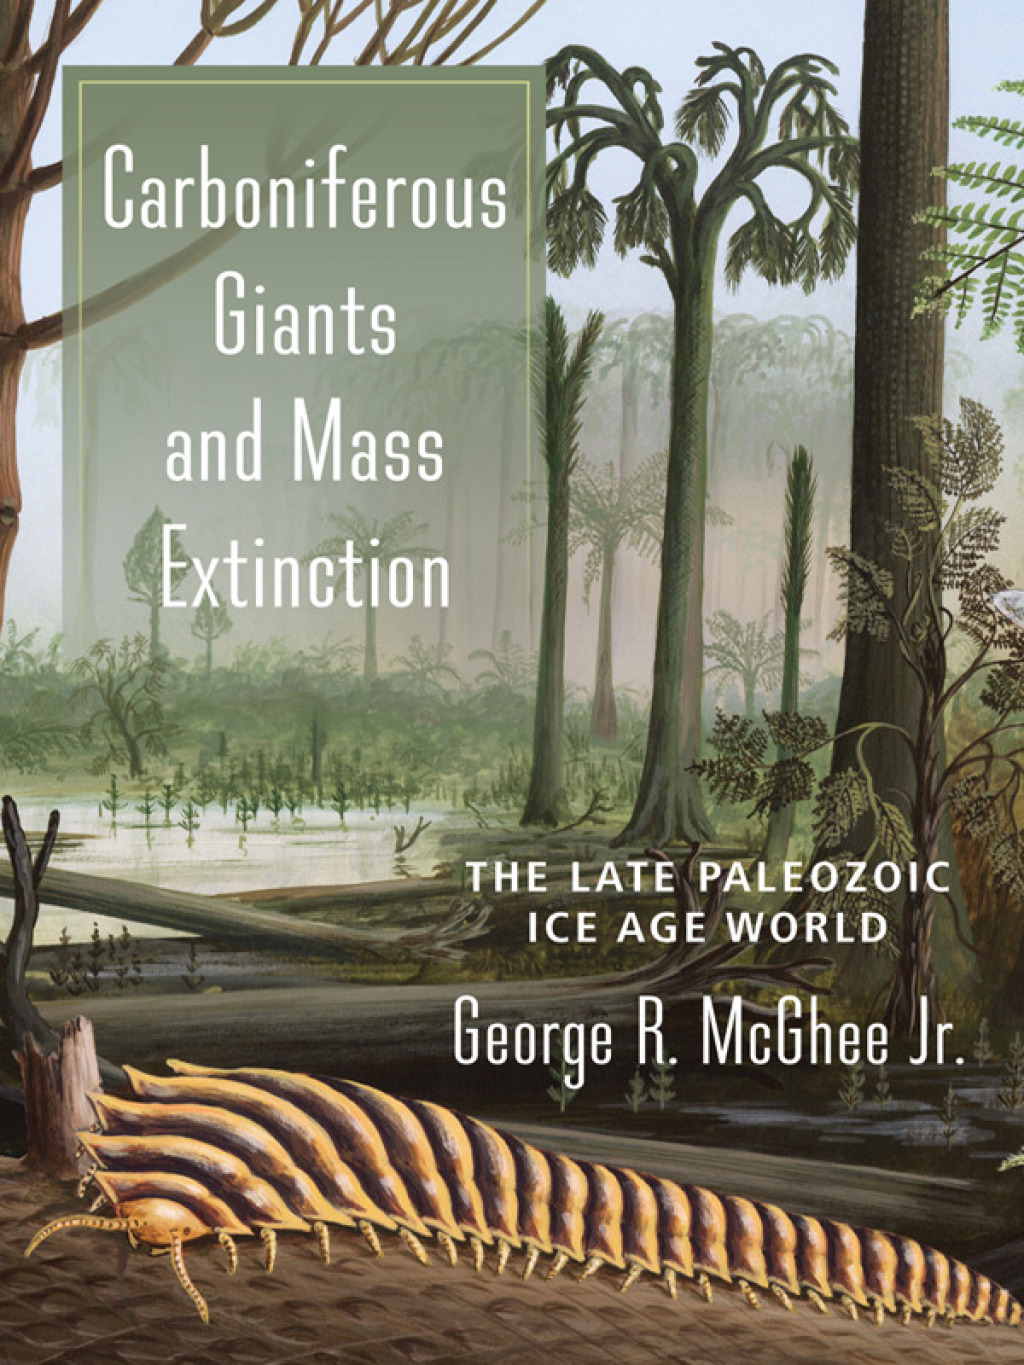 Carboniferous Giants and Mass Extinction (eBook Rental) - George R. McGhee Jr.,